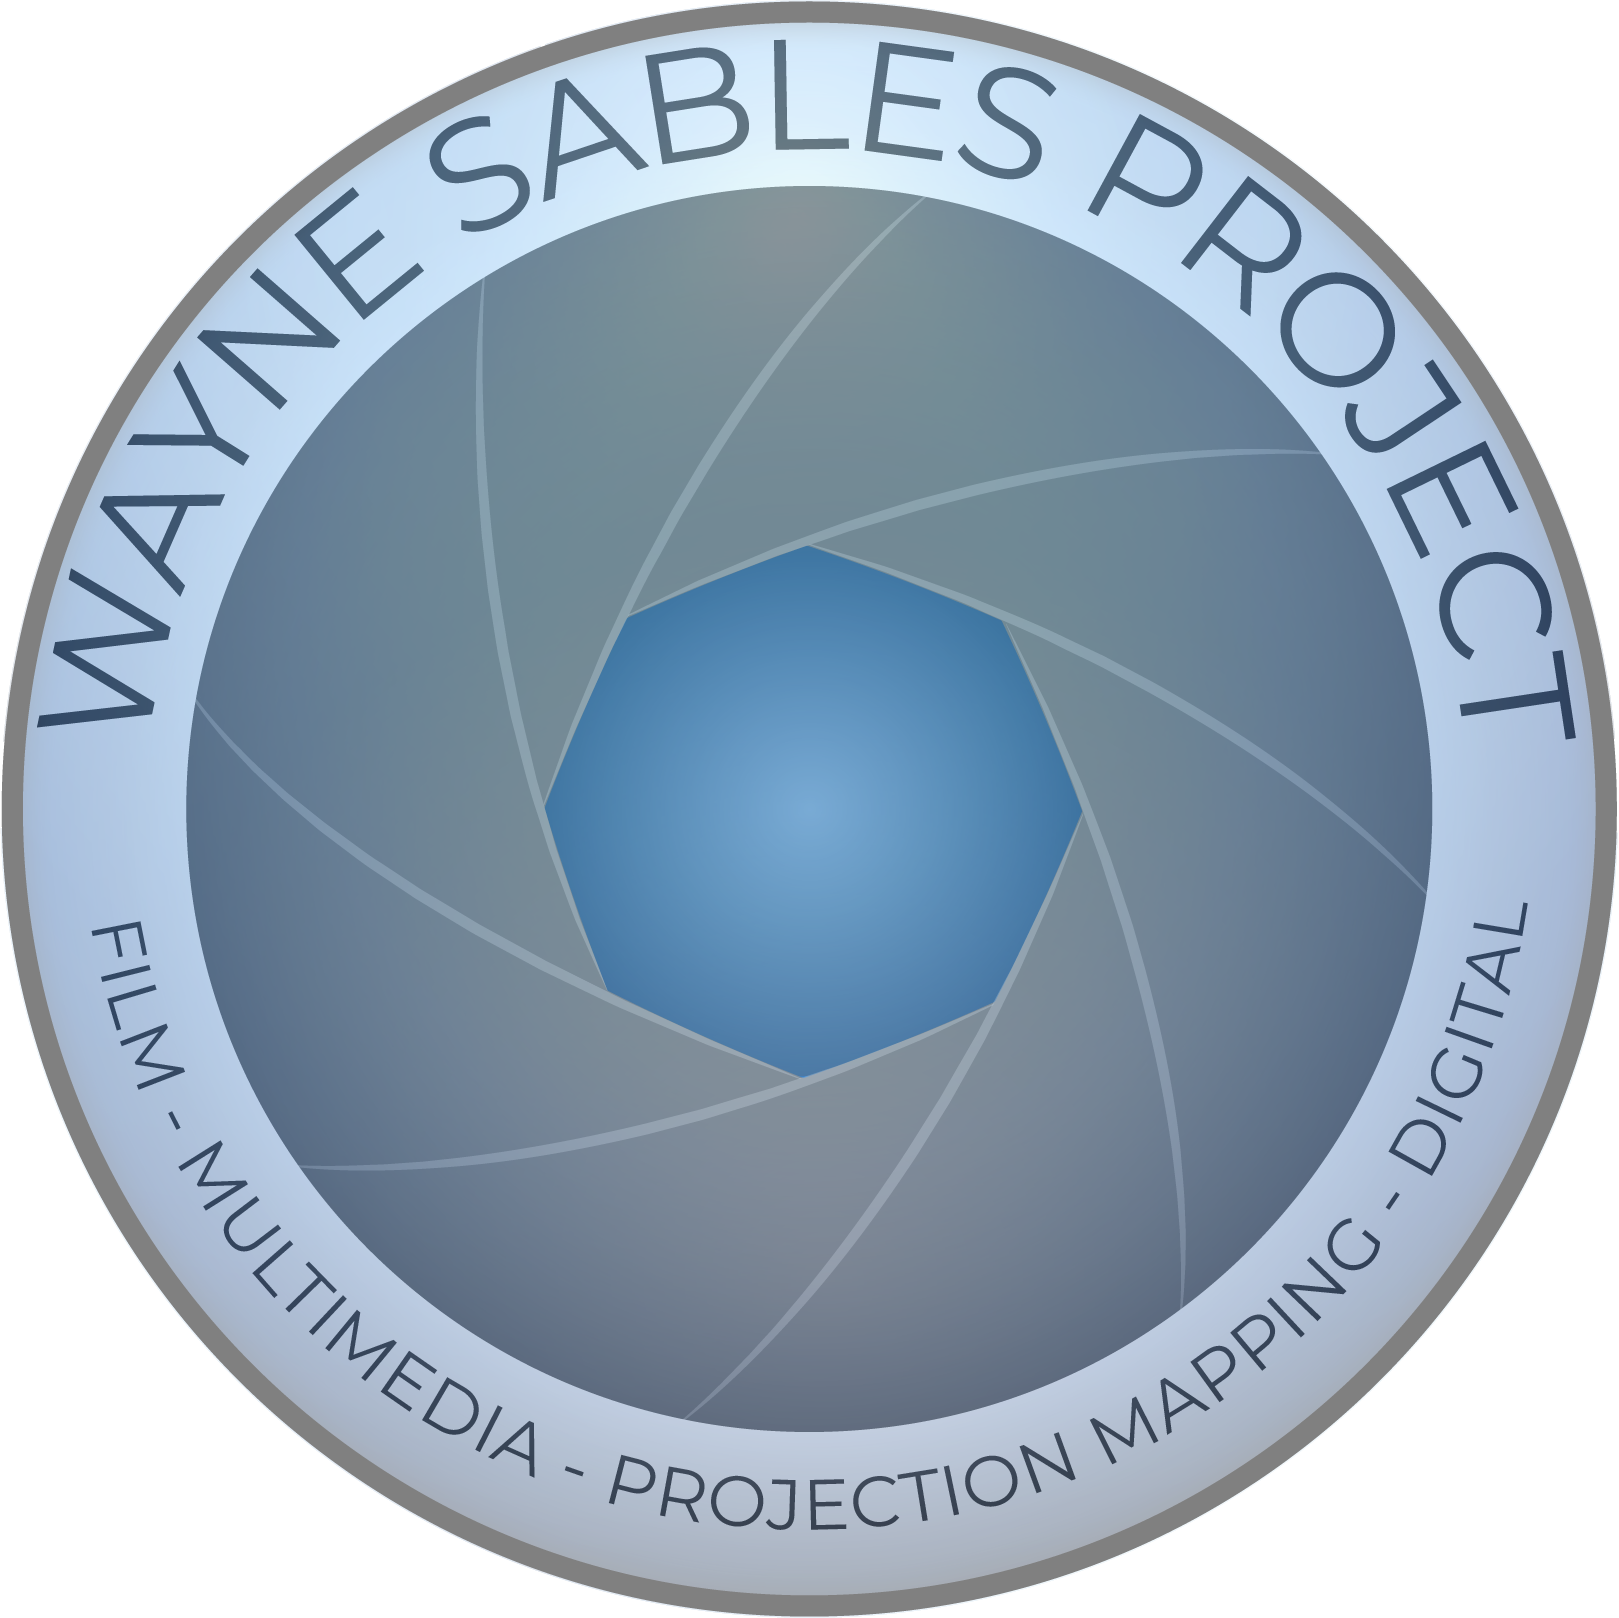 Wayne Sables Project - Film Company